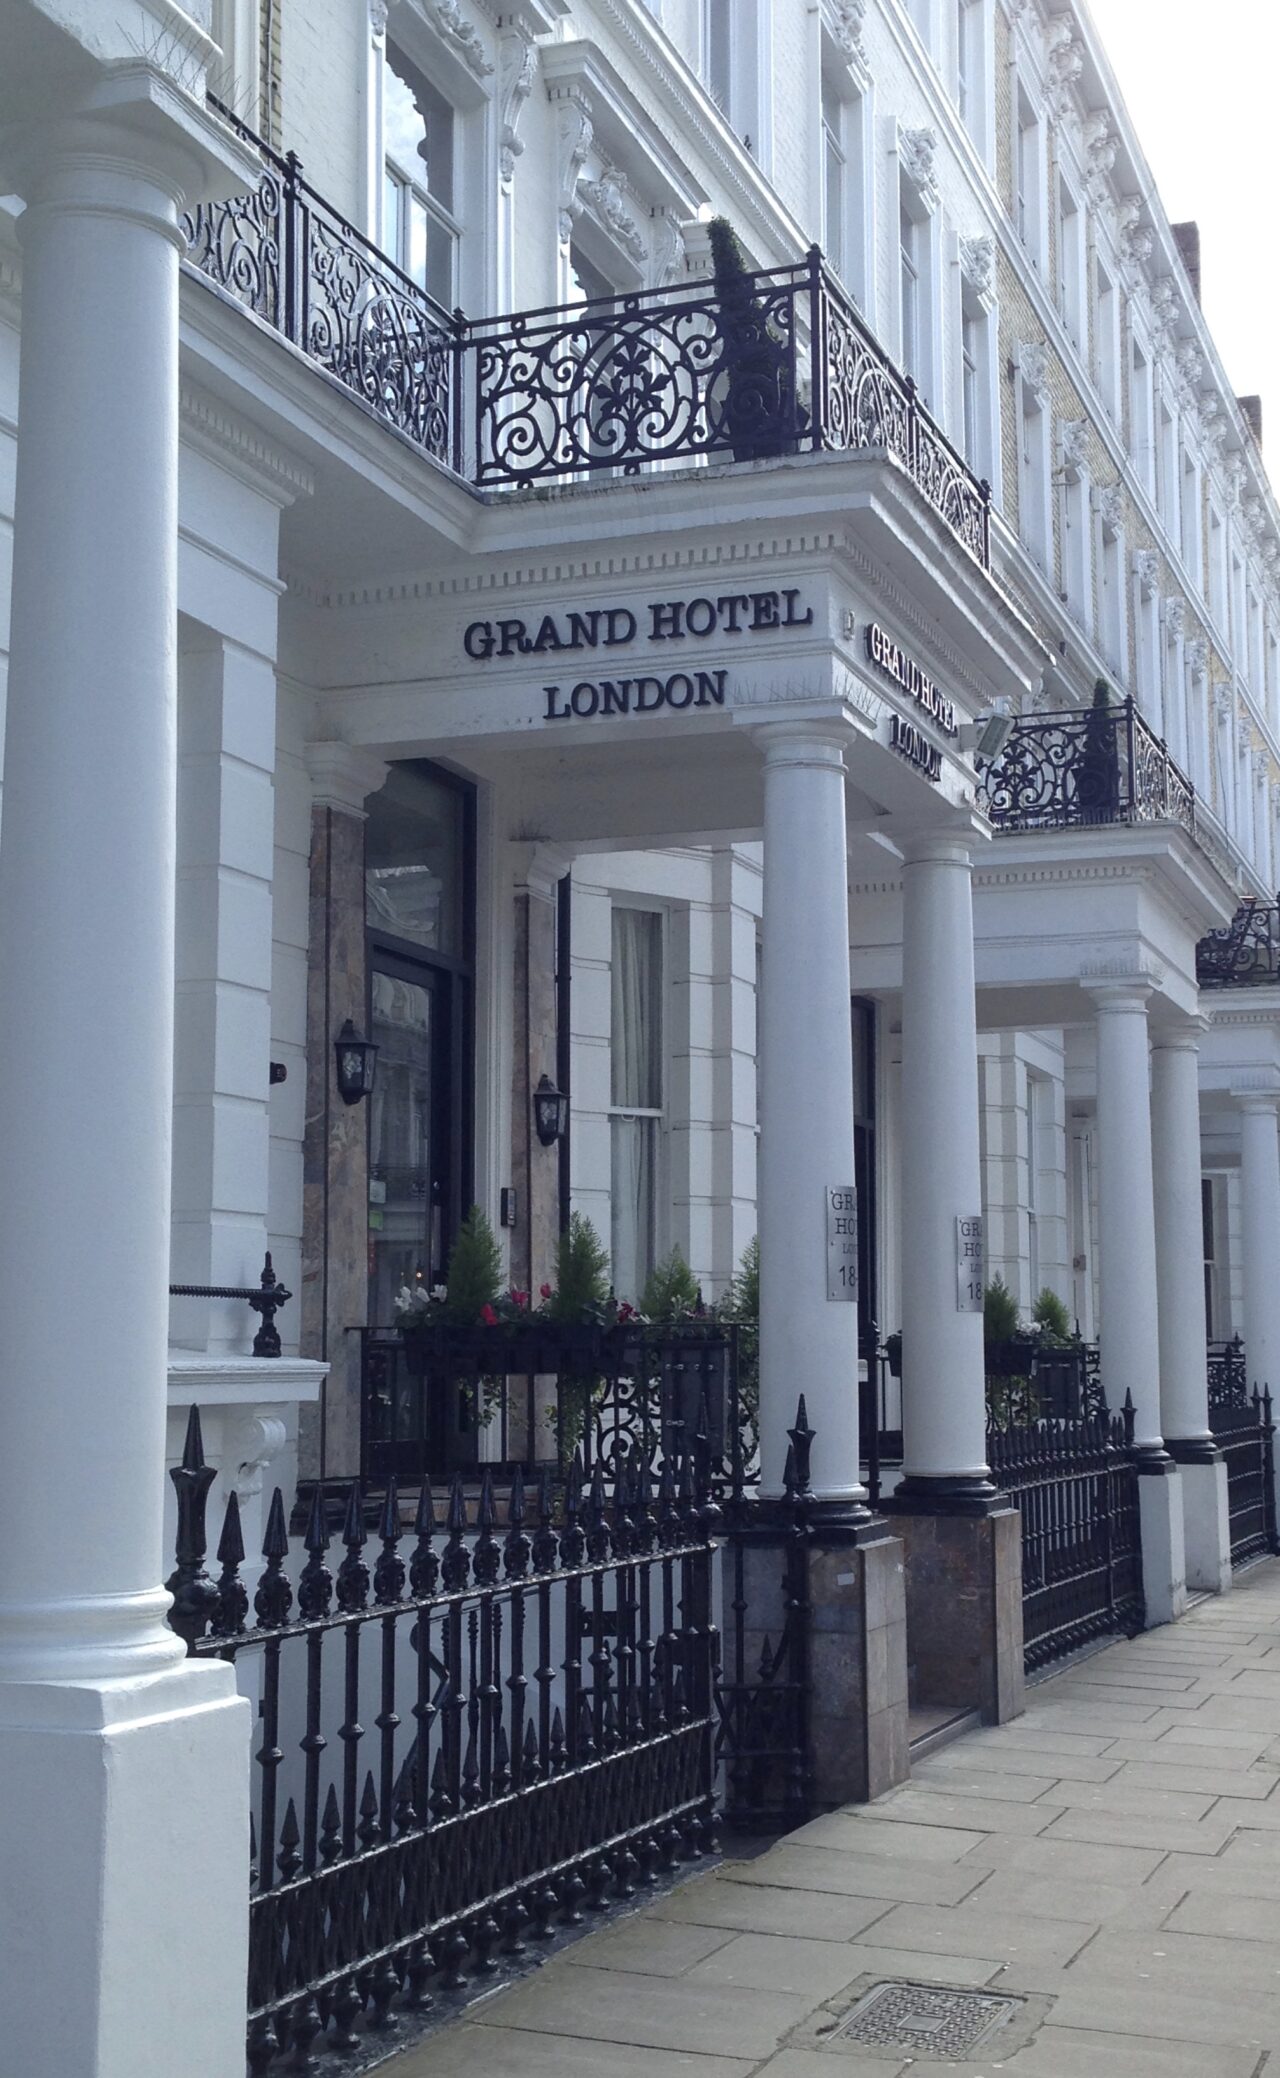 London’s Grand Hotel